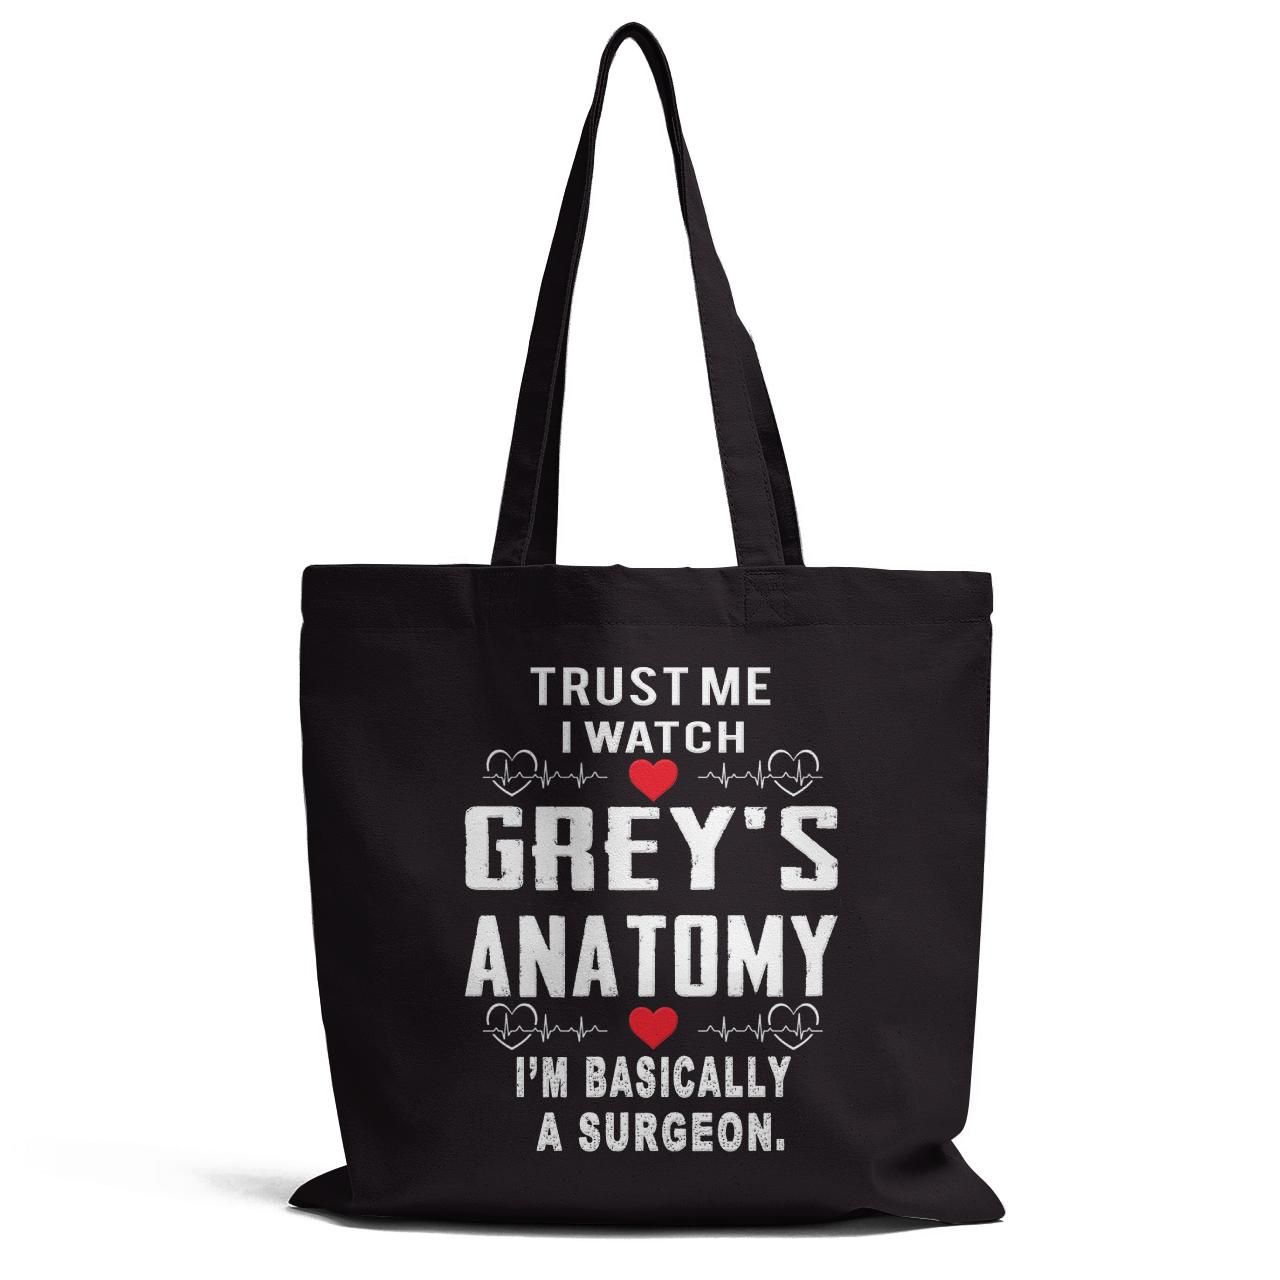 Trust Me I Watch Greys Anatomy Tote Bag